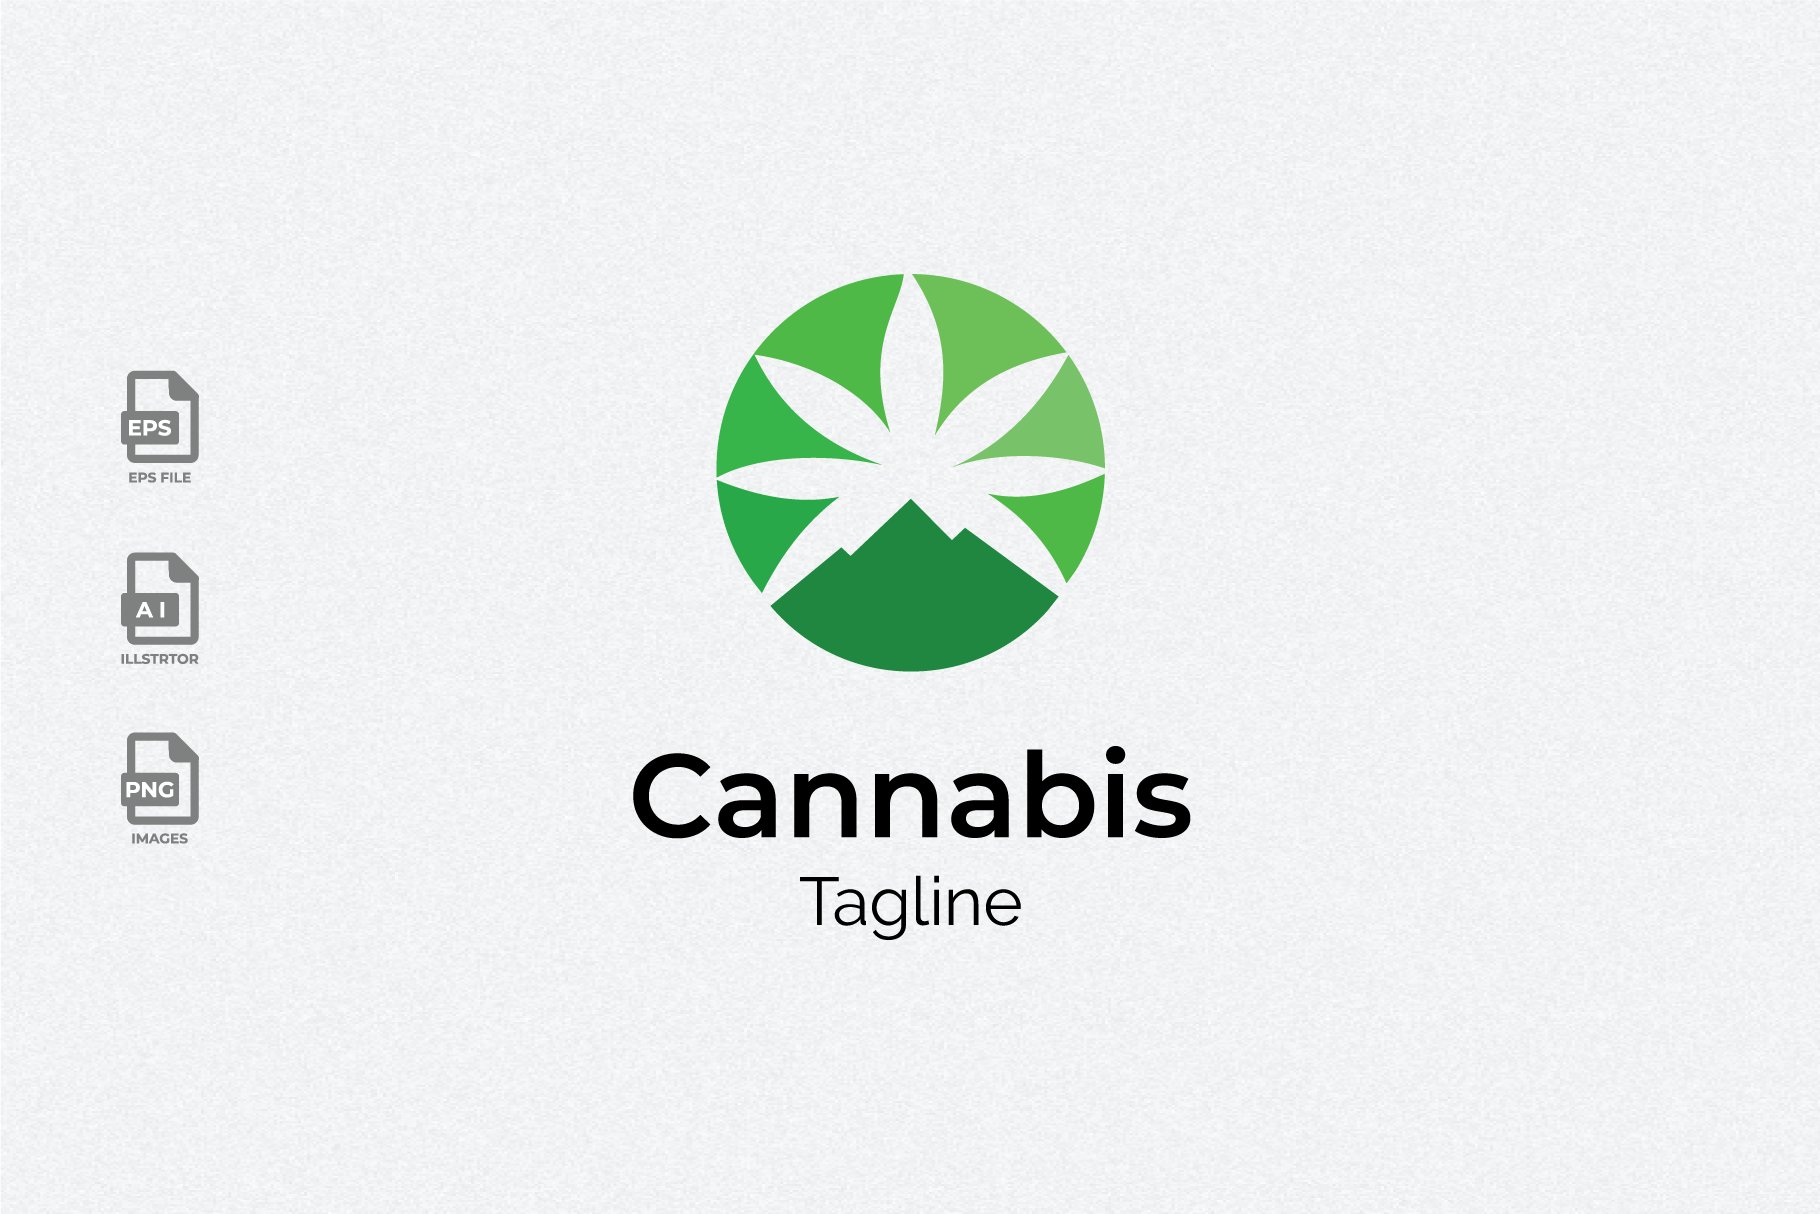 Mountain cannabis logo template cover image.